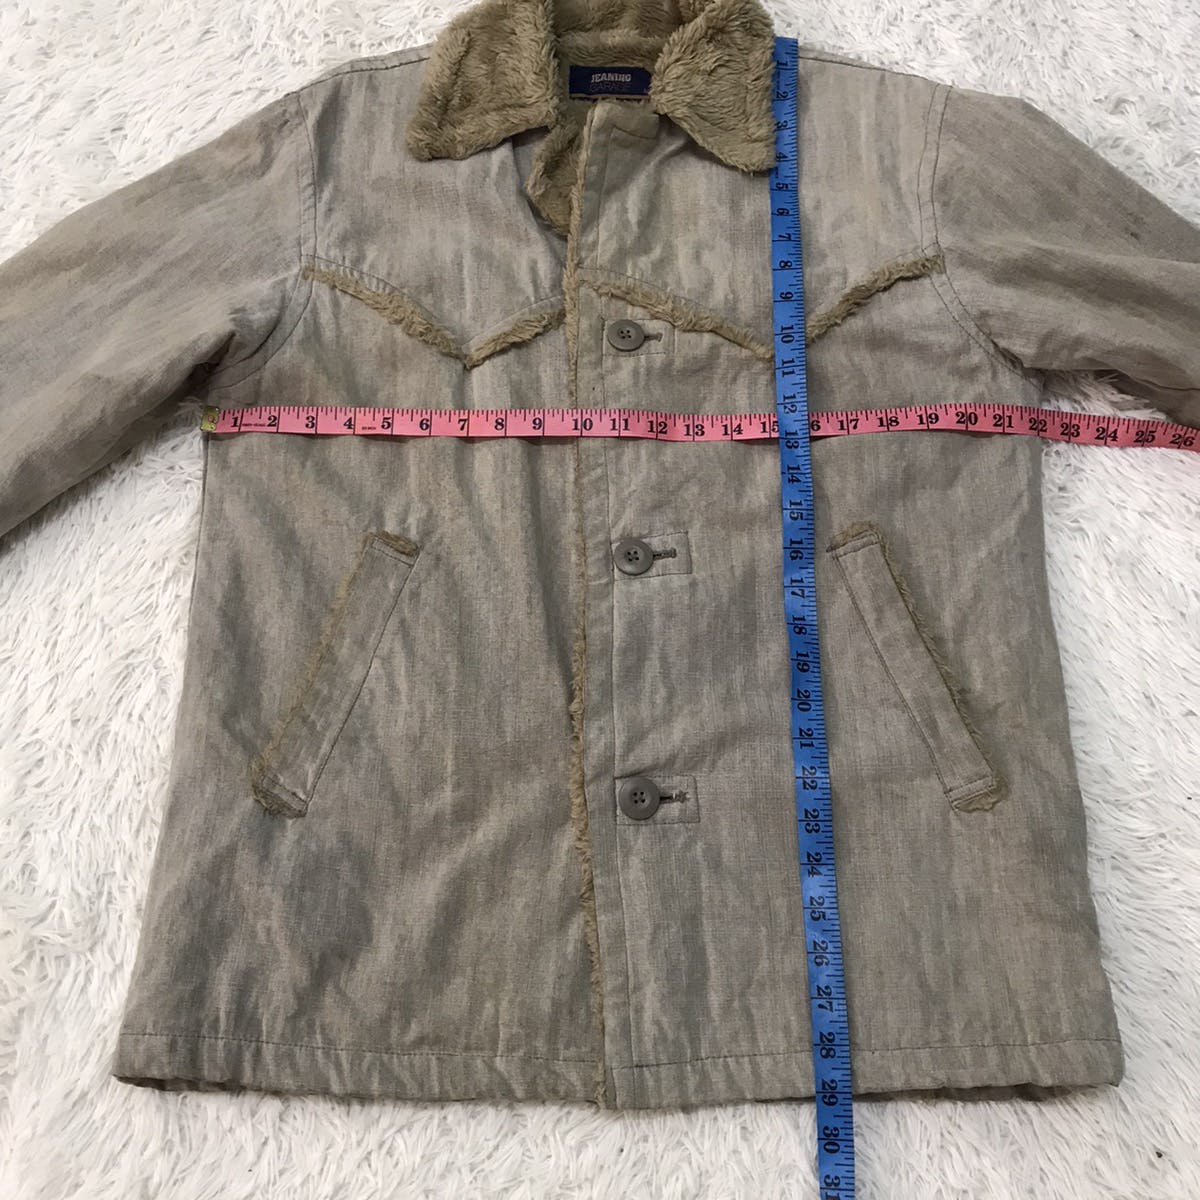 Japanese Brand - Jeaning Garage jacket sherpa inside - 3